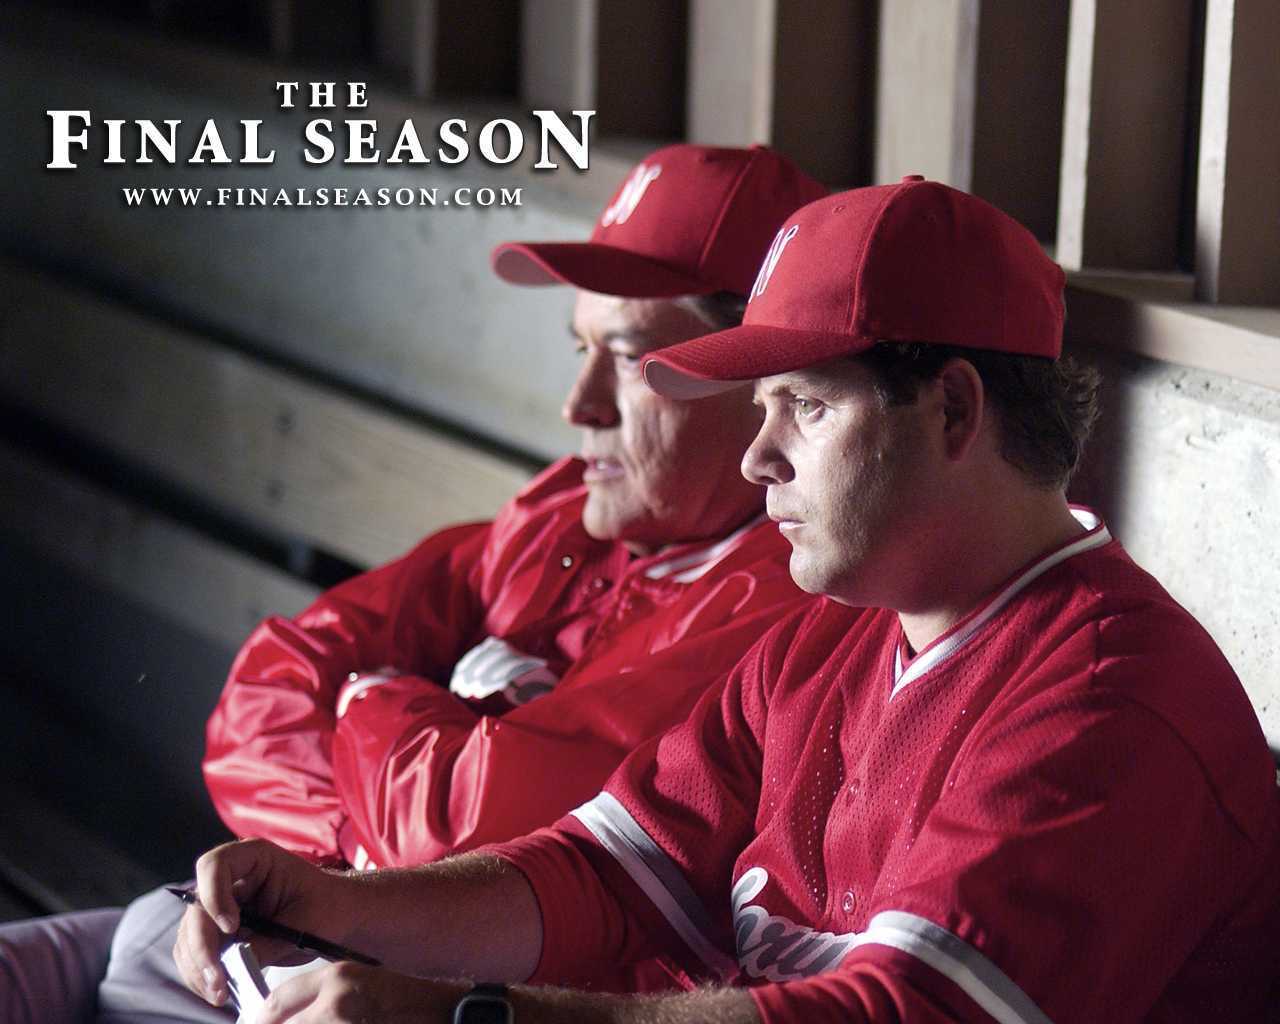 Sean Astin image The Final Season HD wallpaper and background